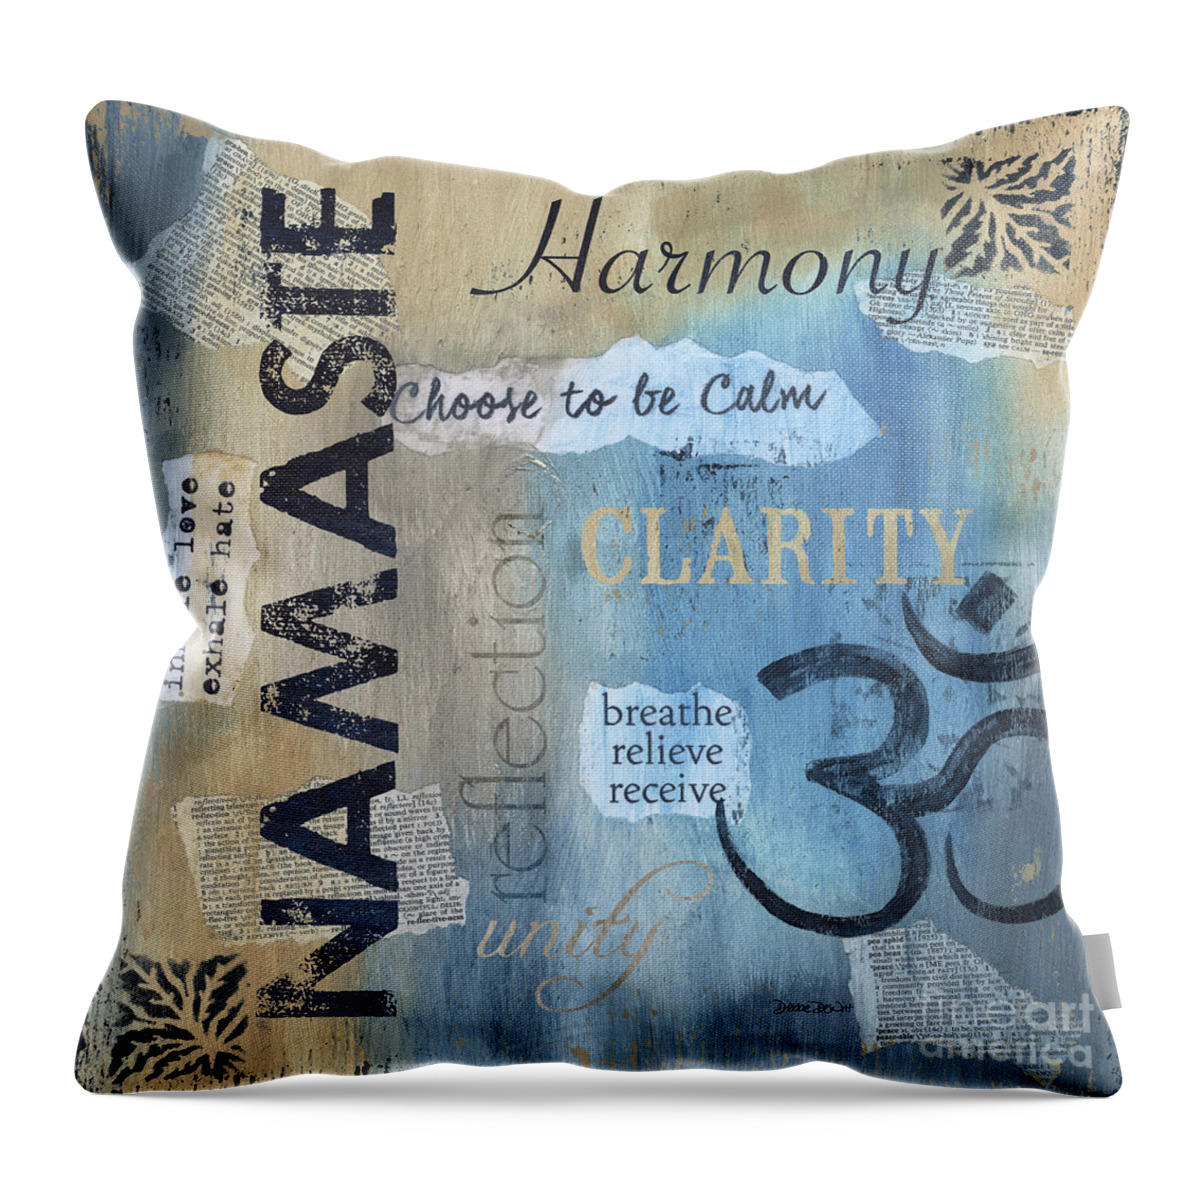 Namaste Throw Pillow featuring the painting Namaste by Debbie DeWitt